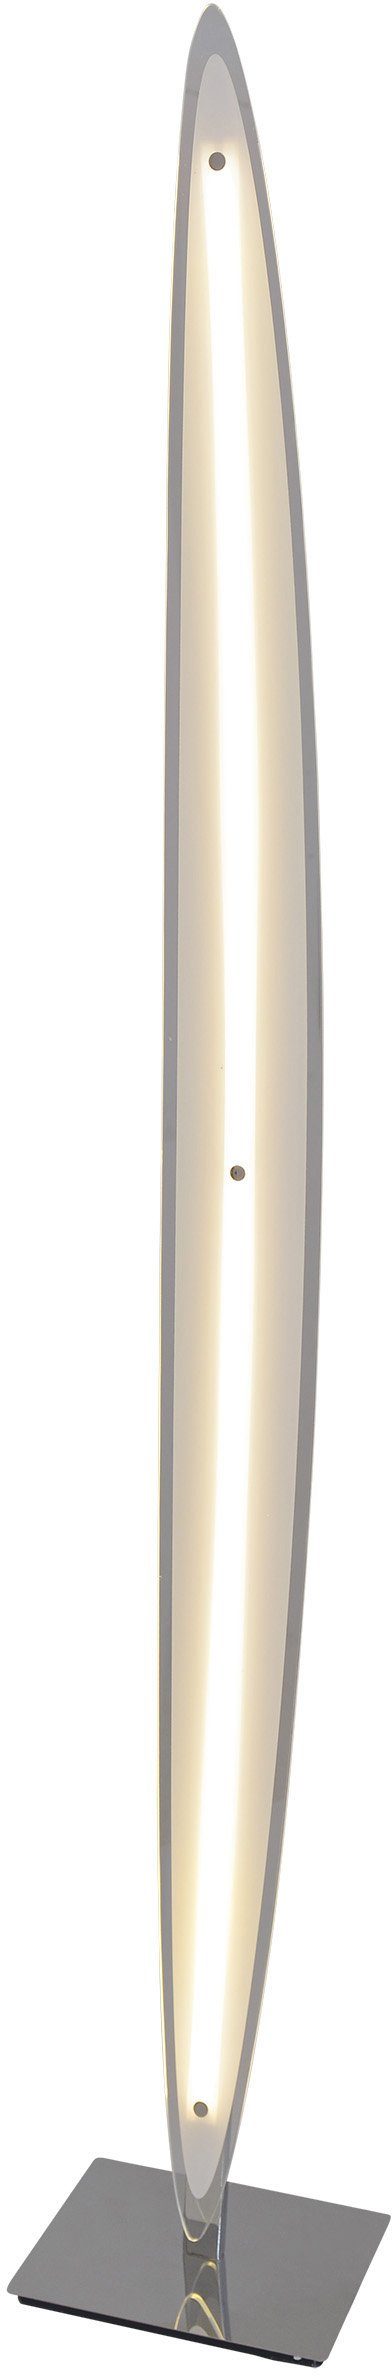 näve LED Stehlampe Surf, Dimmfunktion, LED fest integriert, Warmweiß,  Stehleuchte \